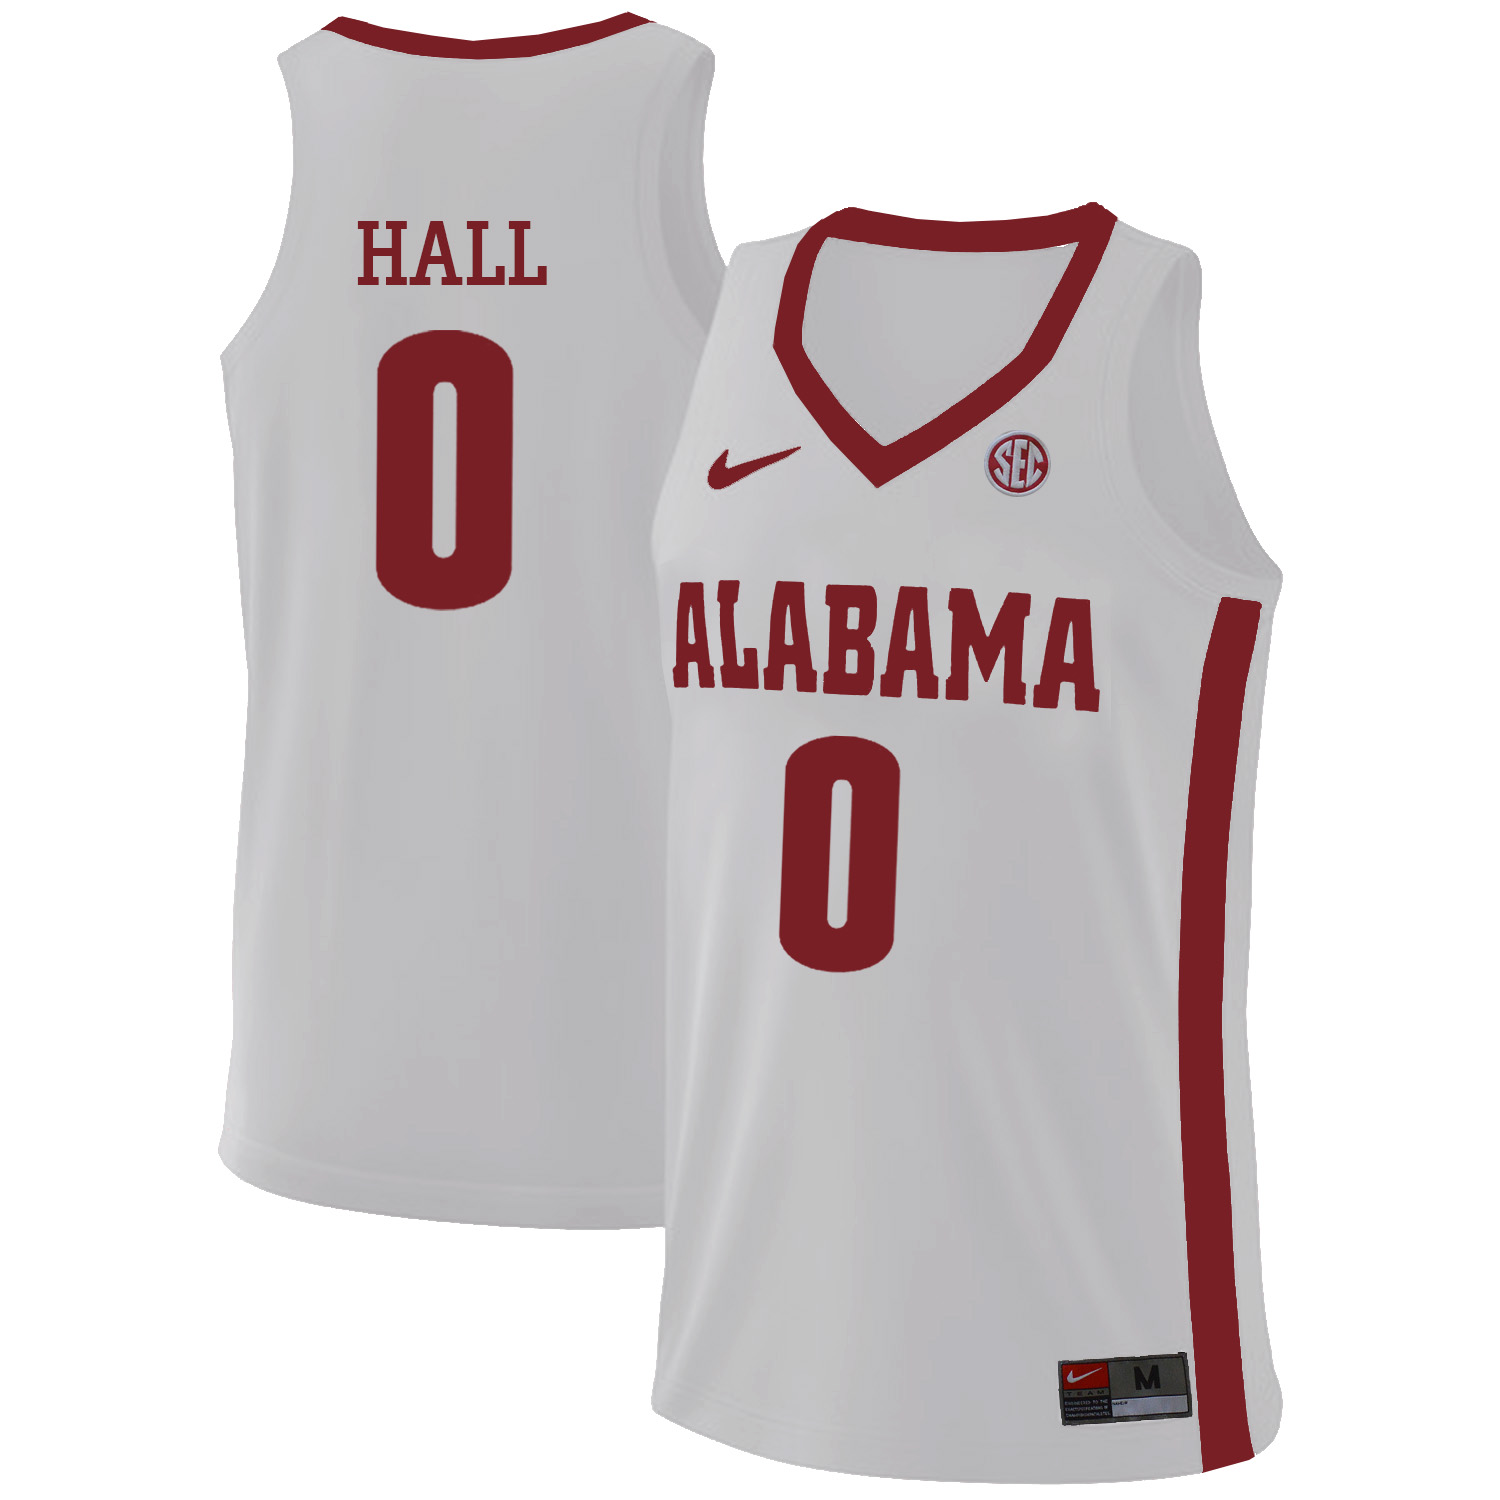 Alabama Crimson Tide 0 Donta Hall White College Basketball Jersey